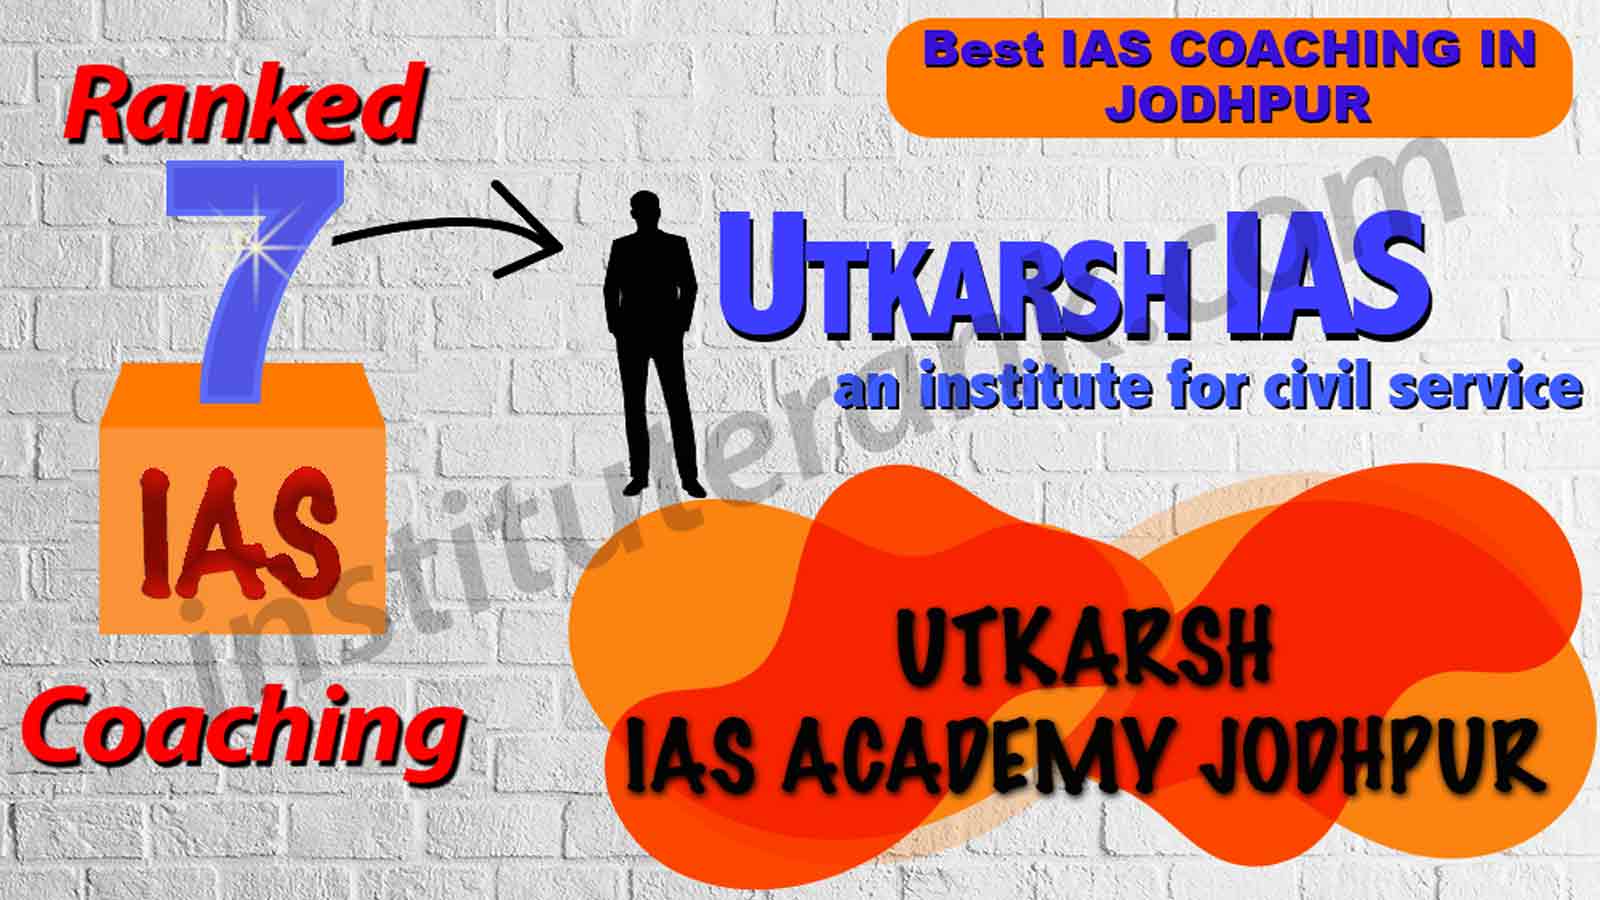 Best IAS Coaching in Jodhpur